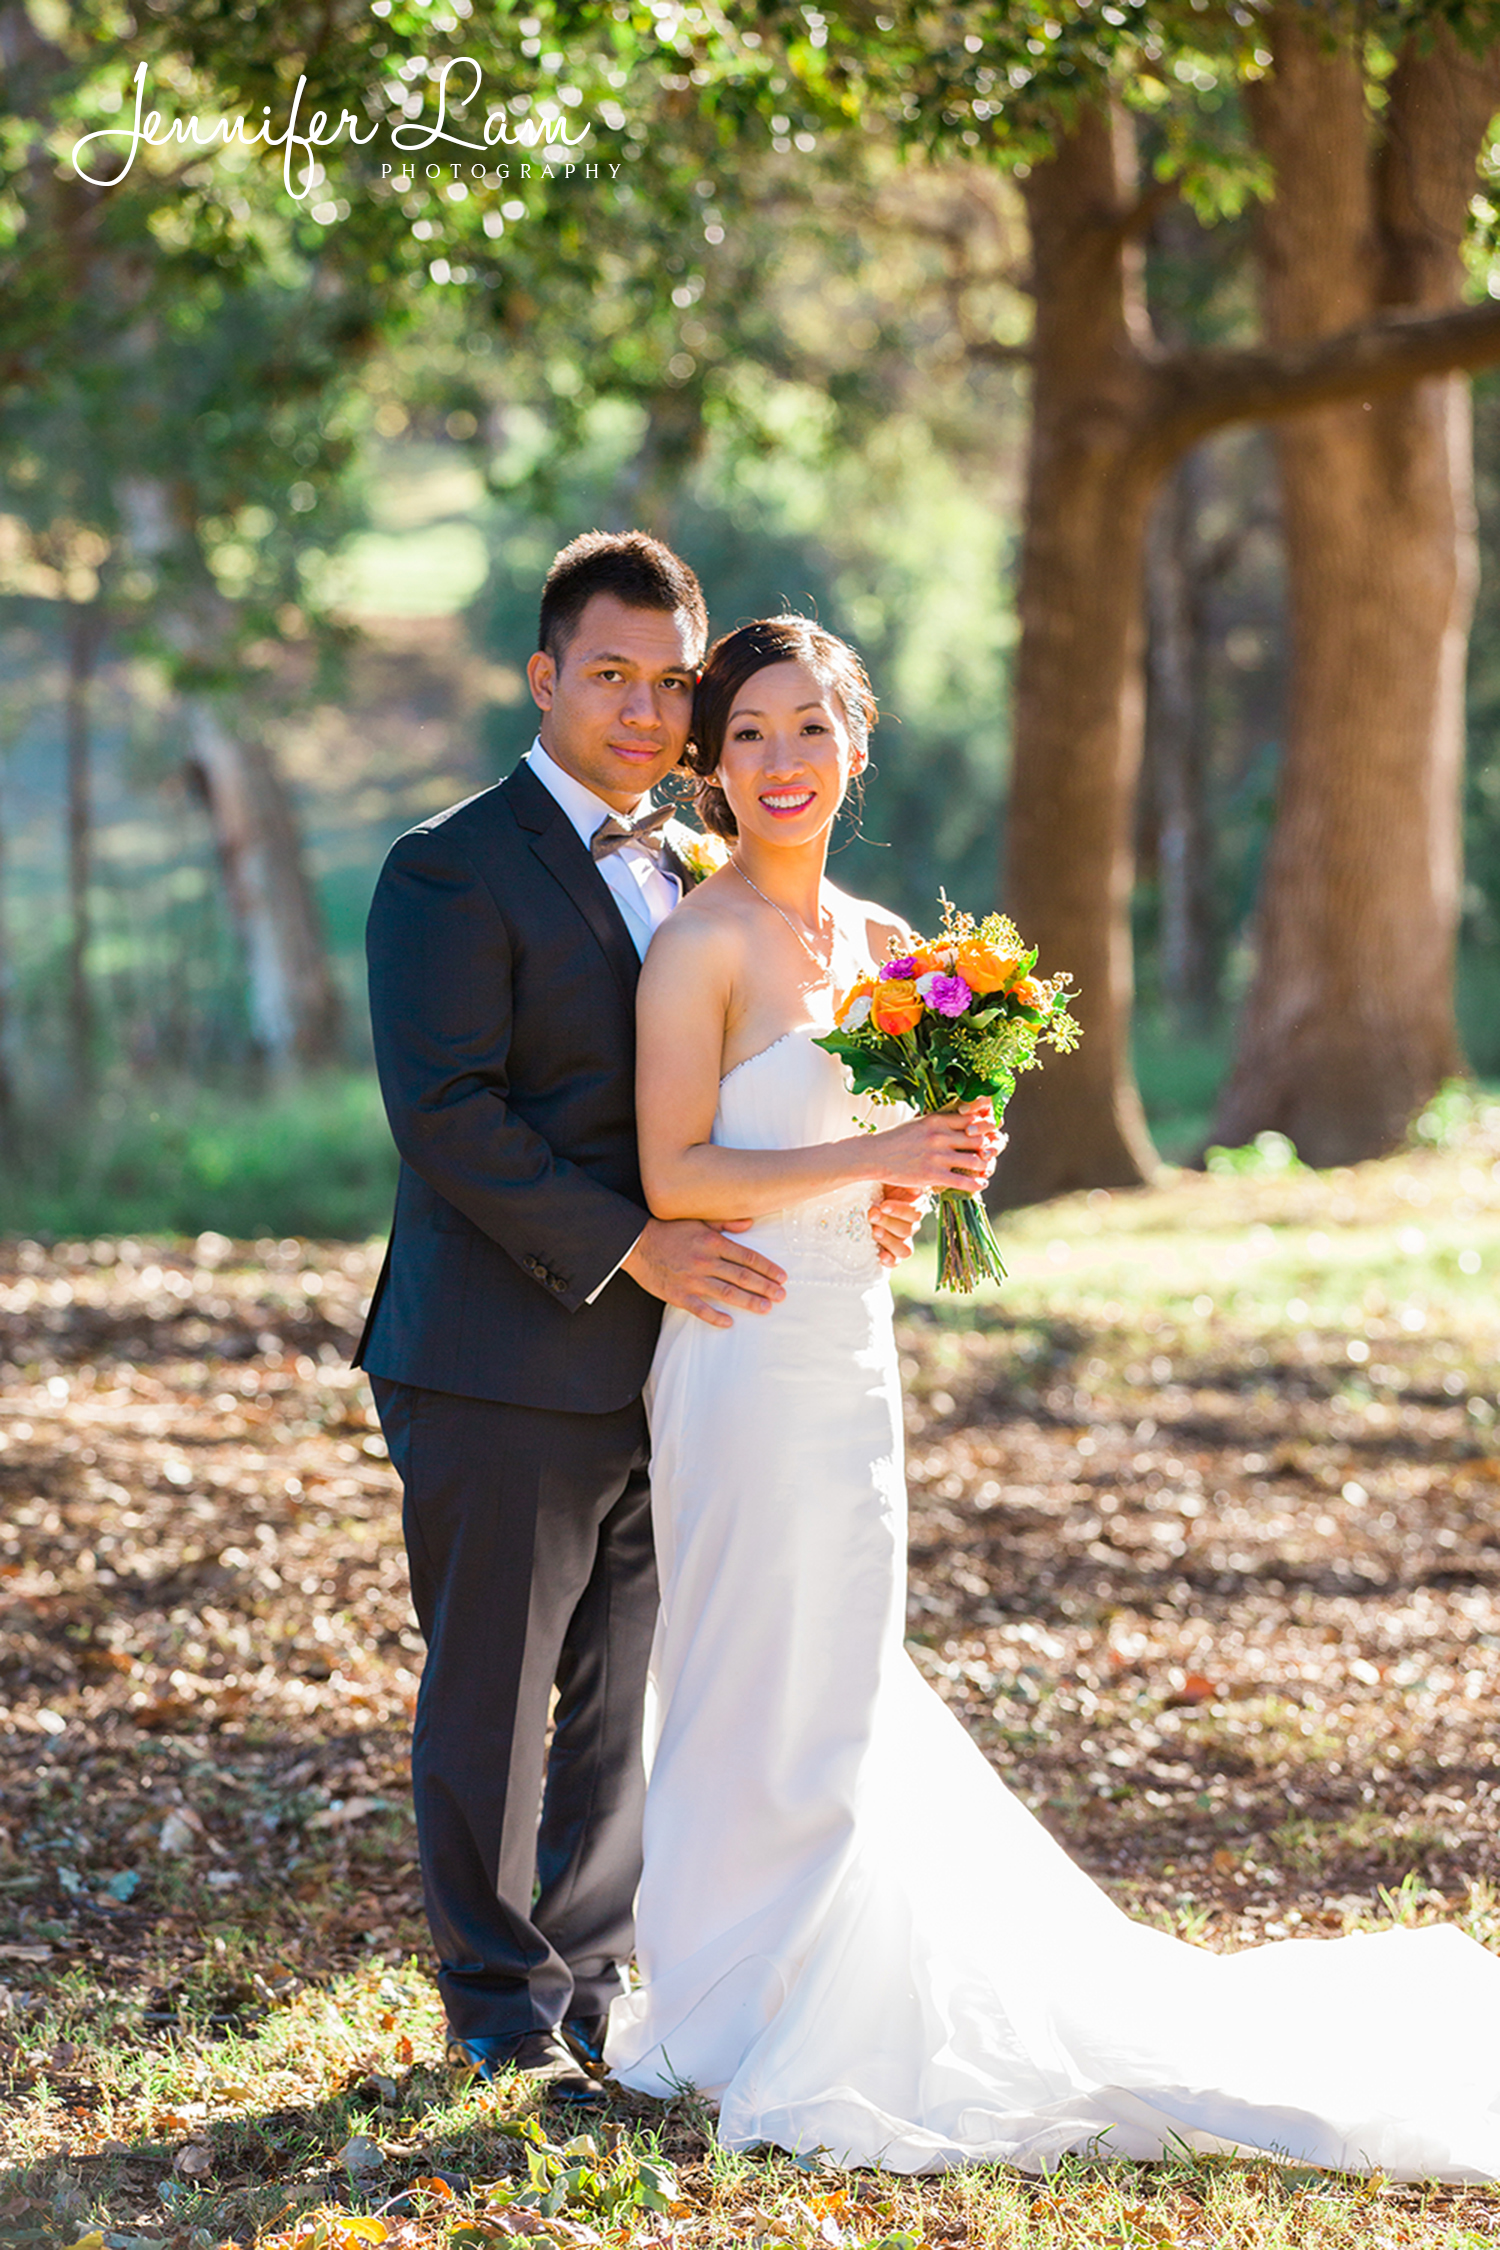 Sydney Wedding Photographer - Jennifer Lam Photography (75).jpg